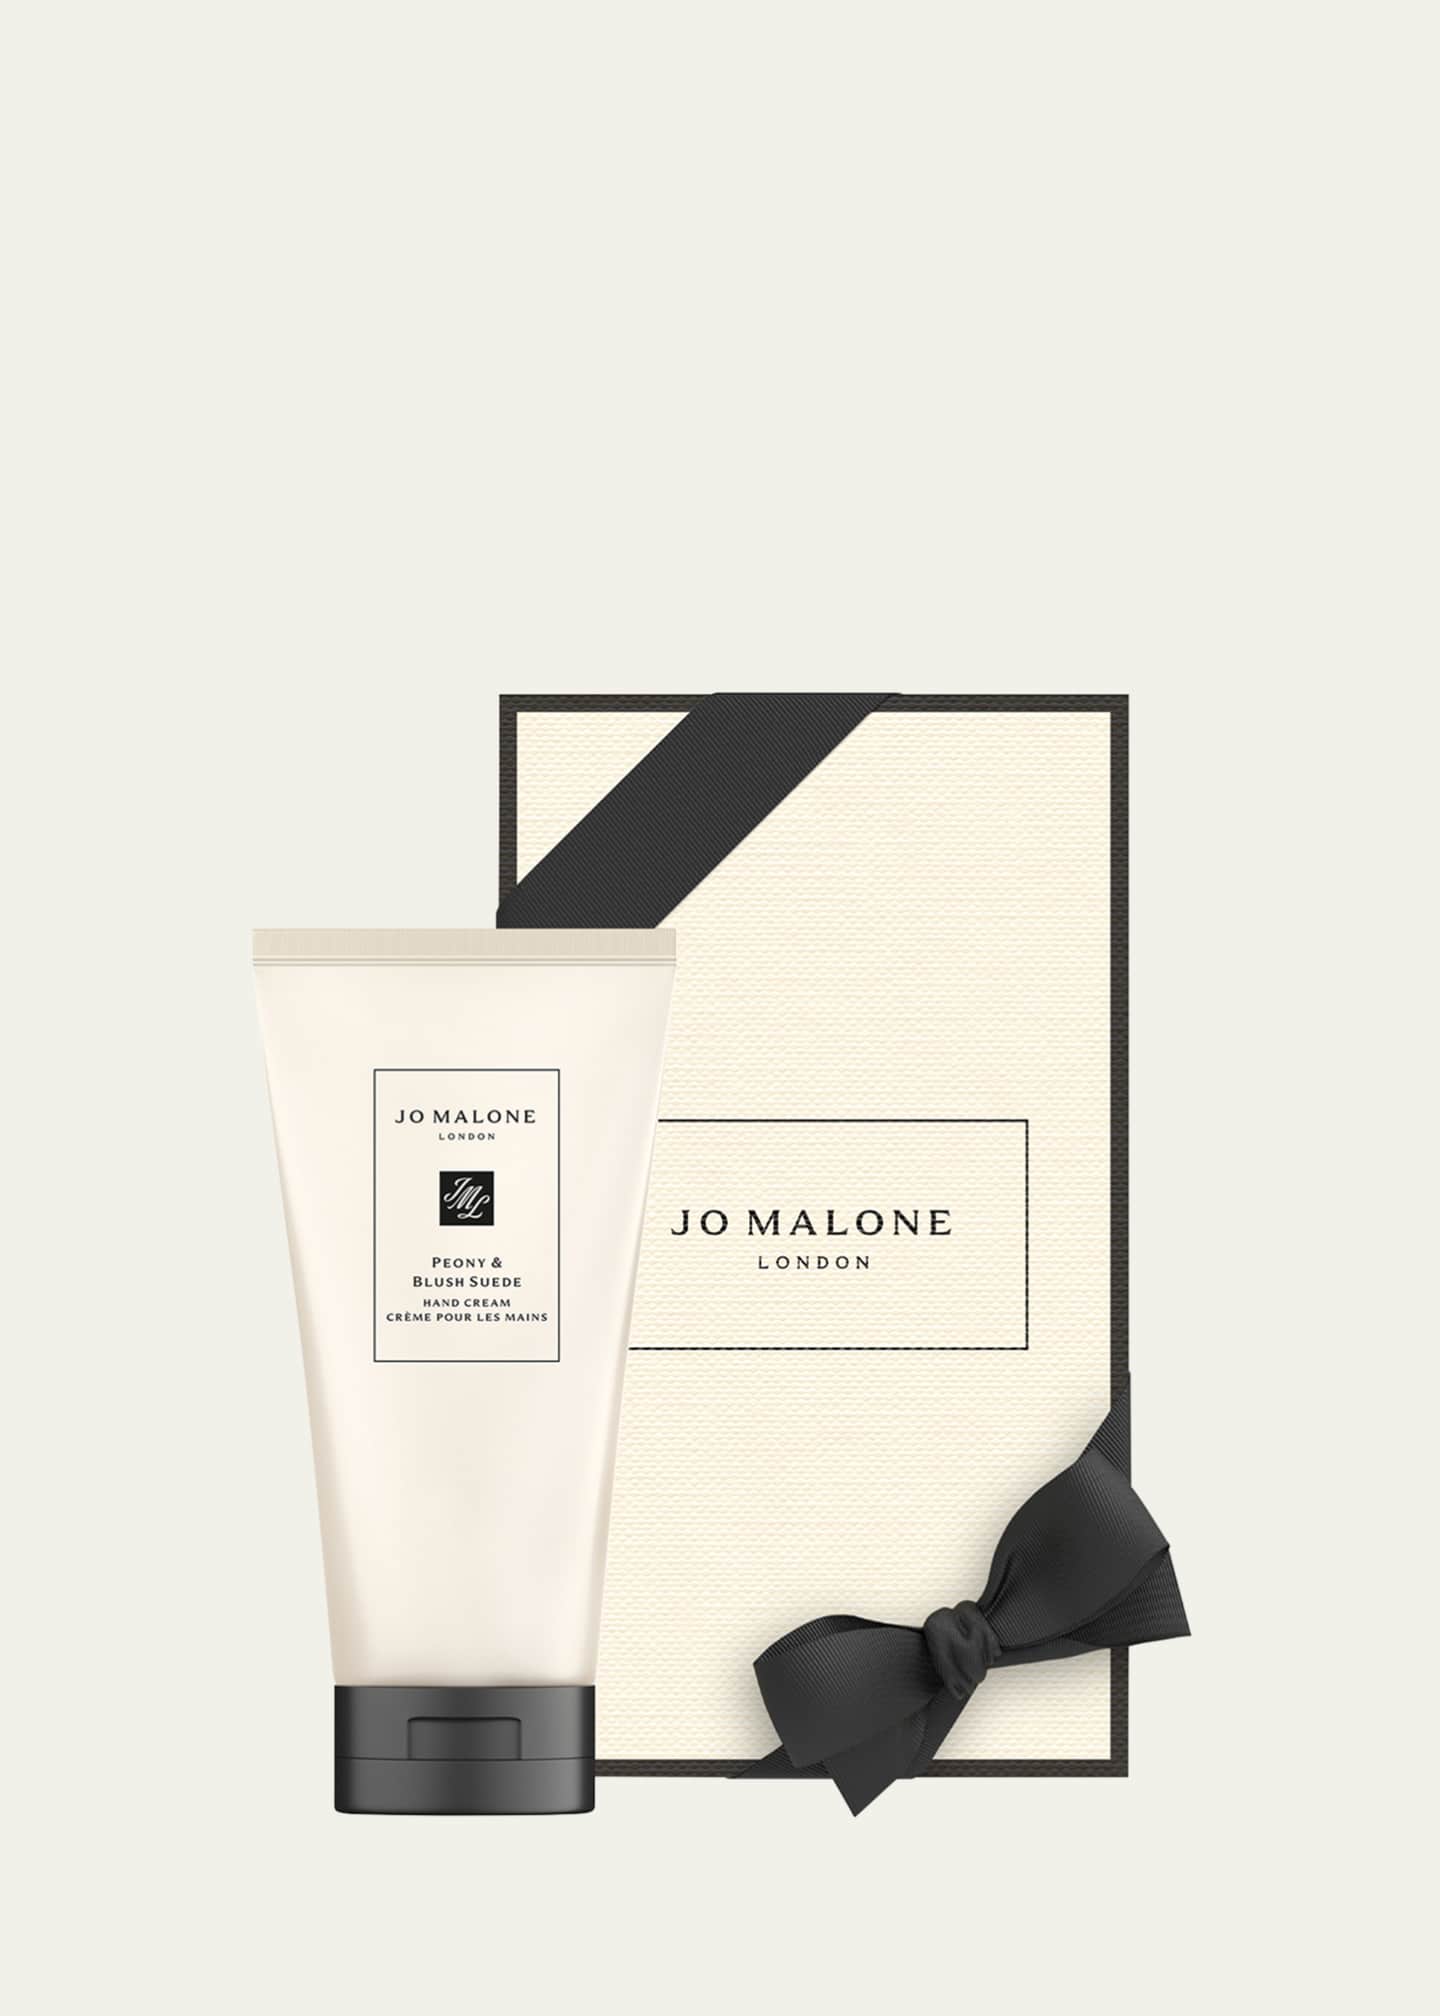 Jo Malone London 1.7 oz. Peony & Blush Suede Hand Cream Image 1 of 3